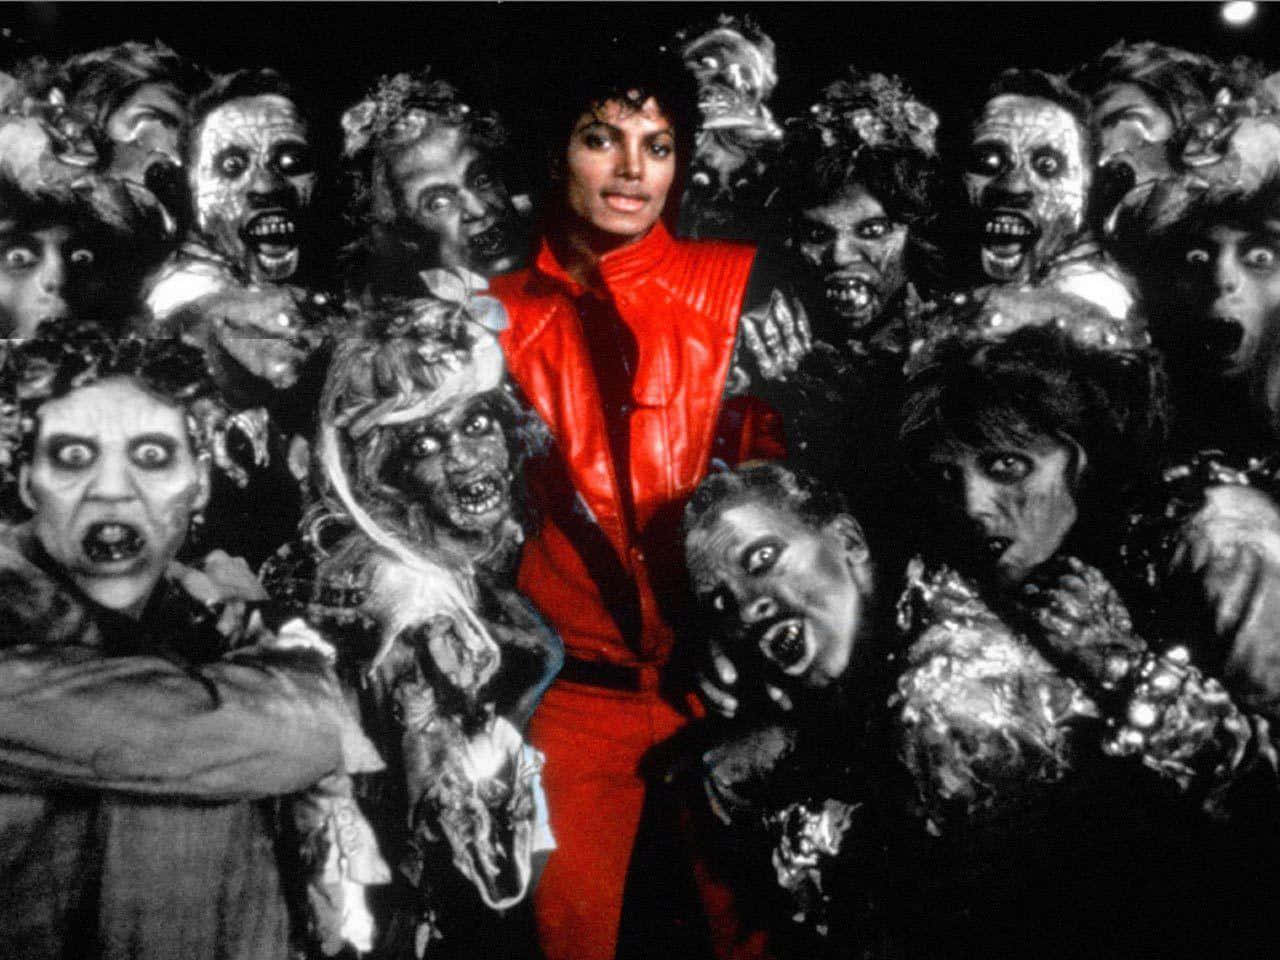 Download Michael Jackson in epic Thriller pose Wallpaper | Wallpapers.com